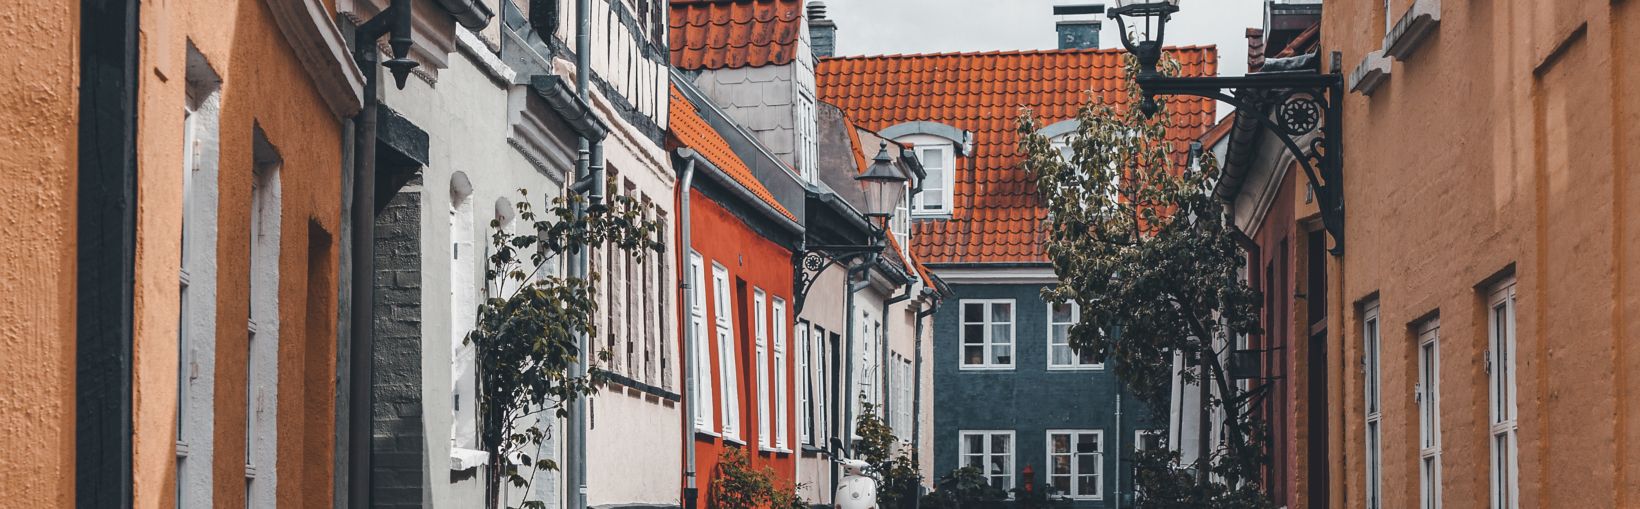 Aalborg houses